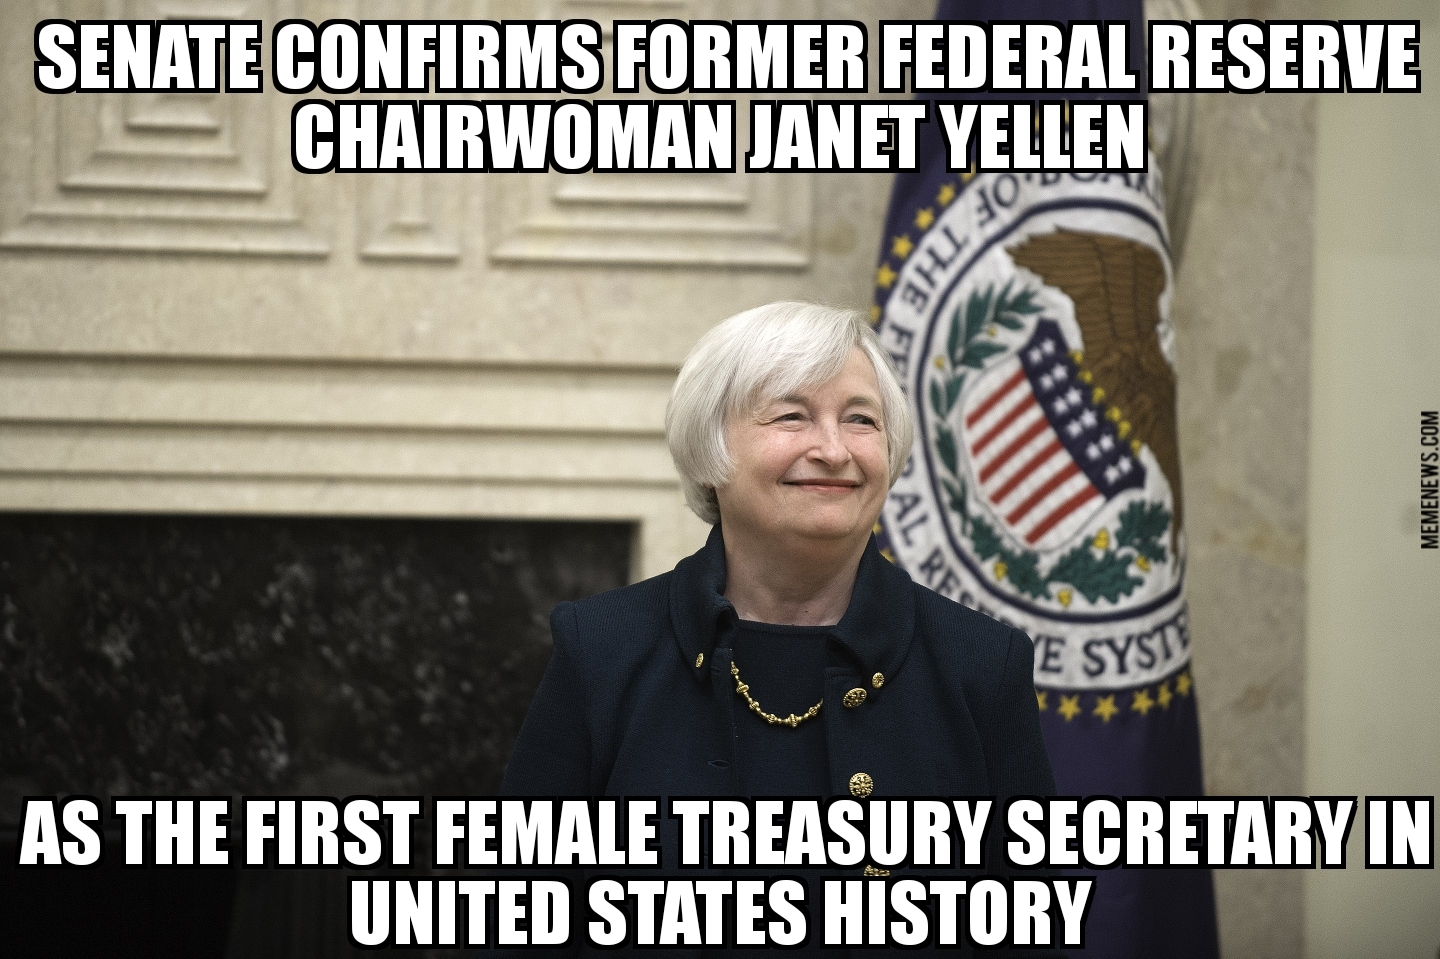 Senate confirms Janet Yellen as Treasury Secretary